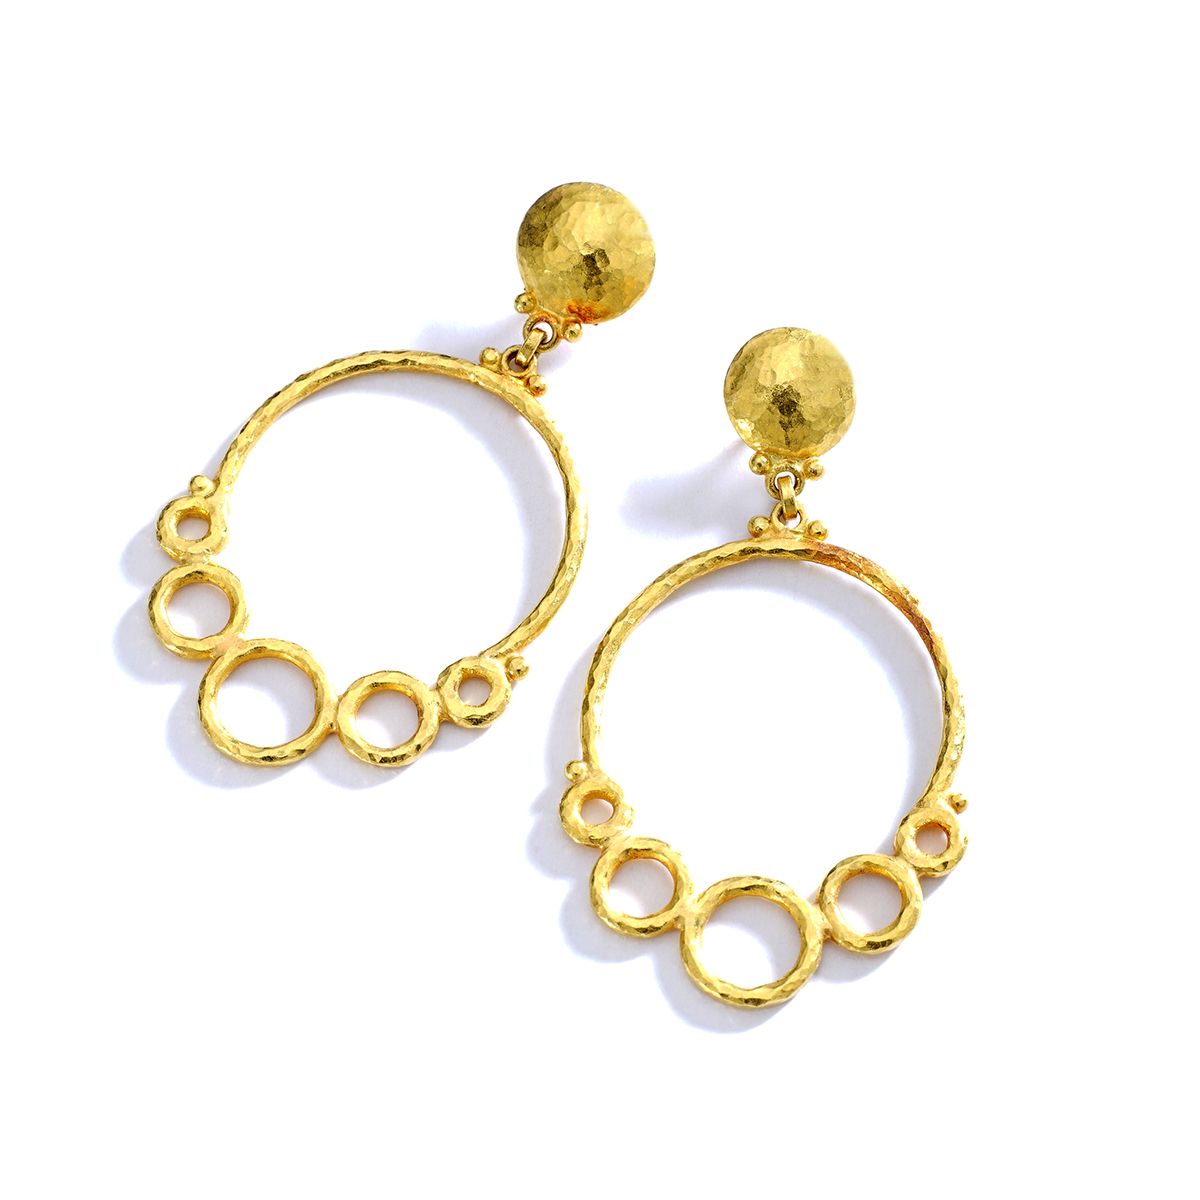 Gurman 新伊特鲁里亚人18K黄金耳环，带不同大小的镂空圆环

签名：Gurman

重量 : 7,89 g